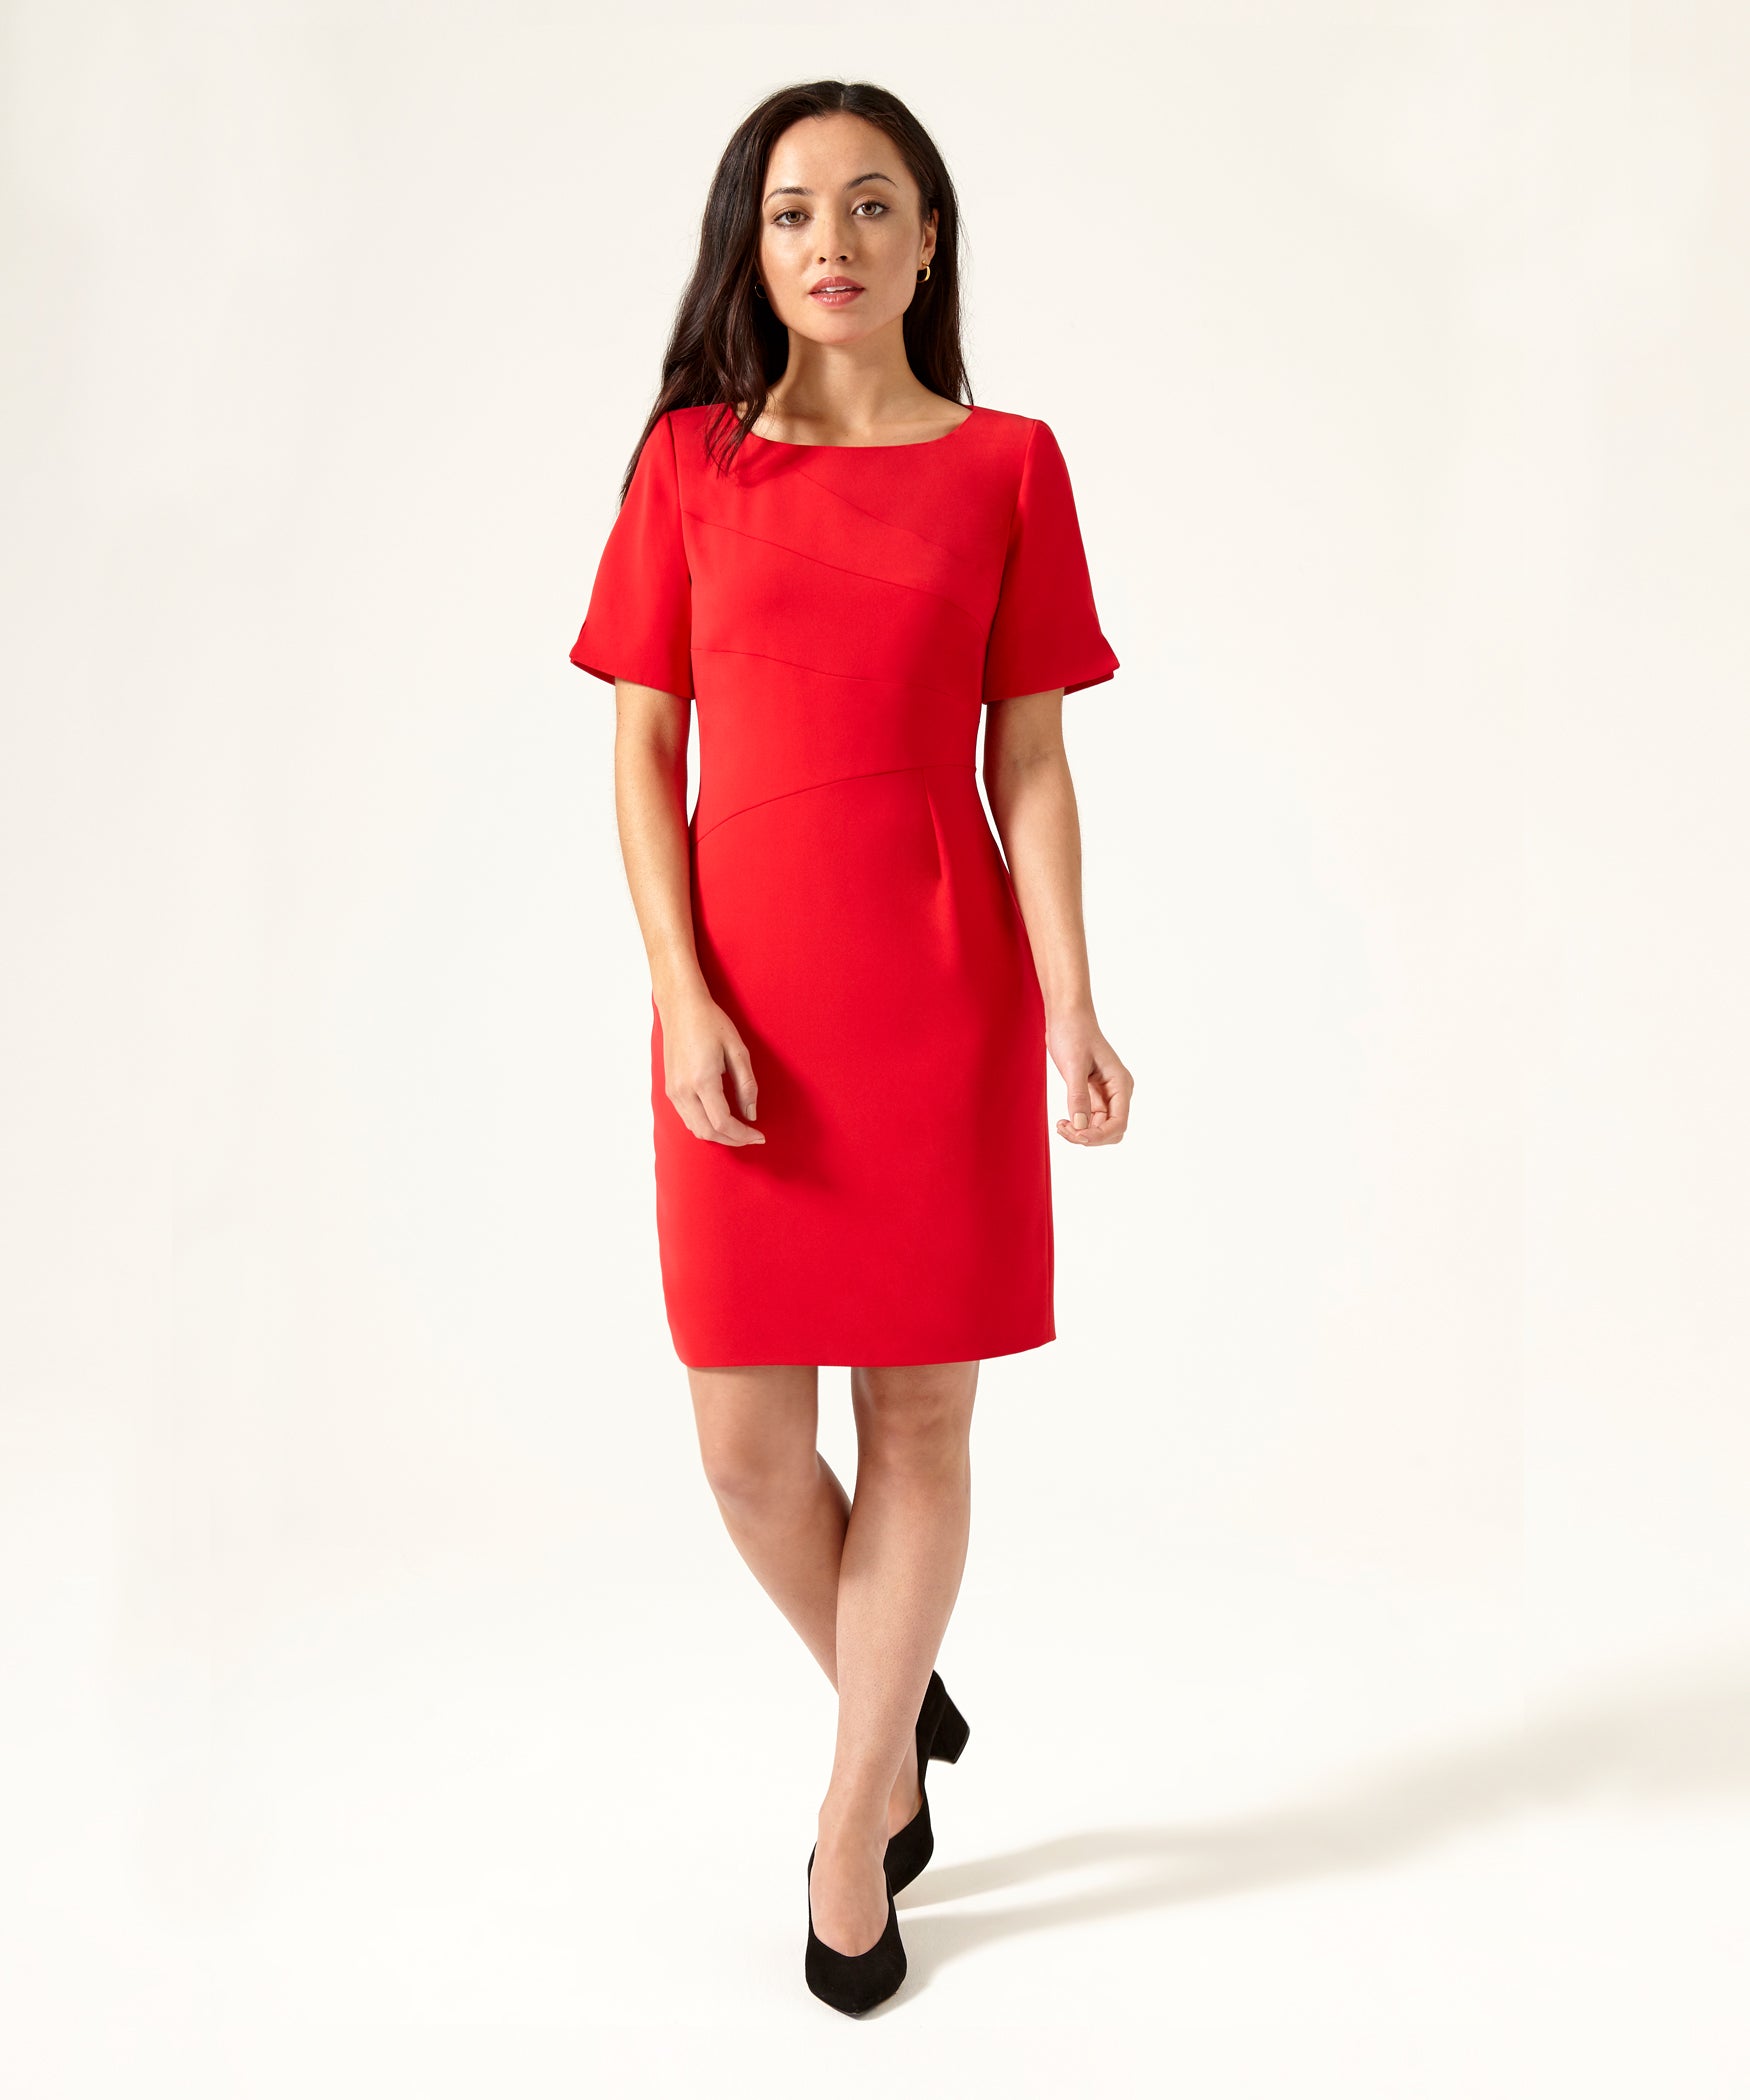 Petite Red Shift Dress (Short Sleeved ...